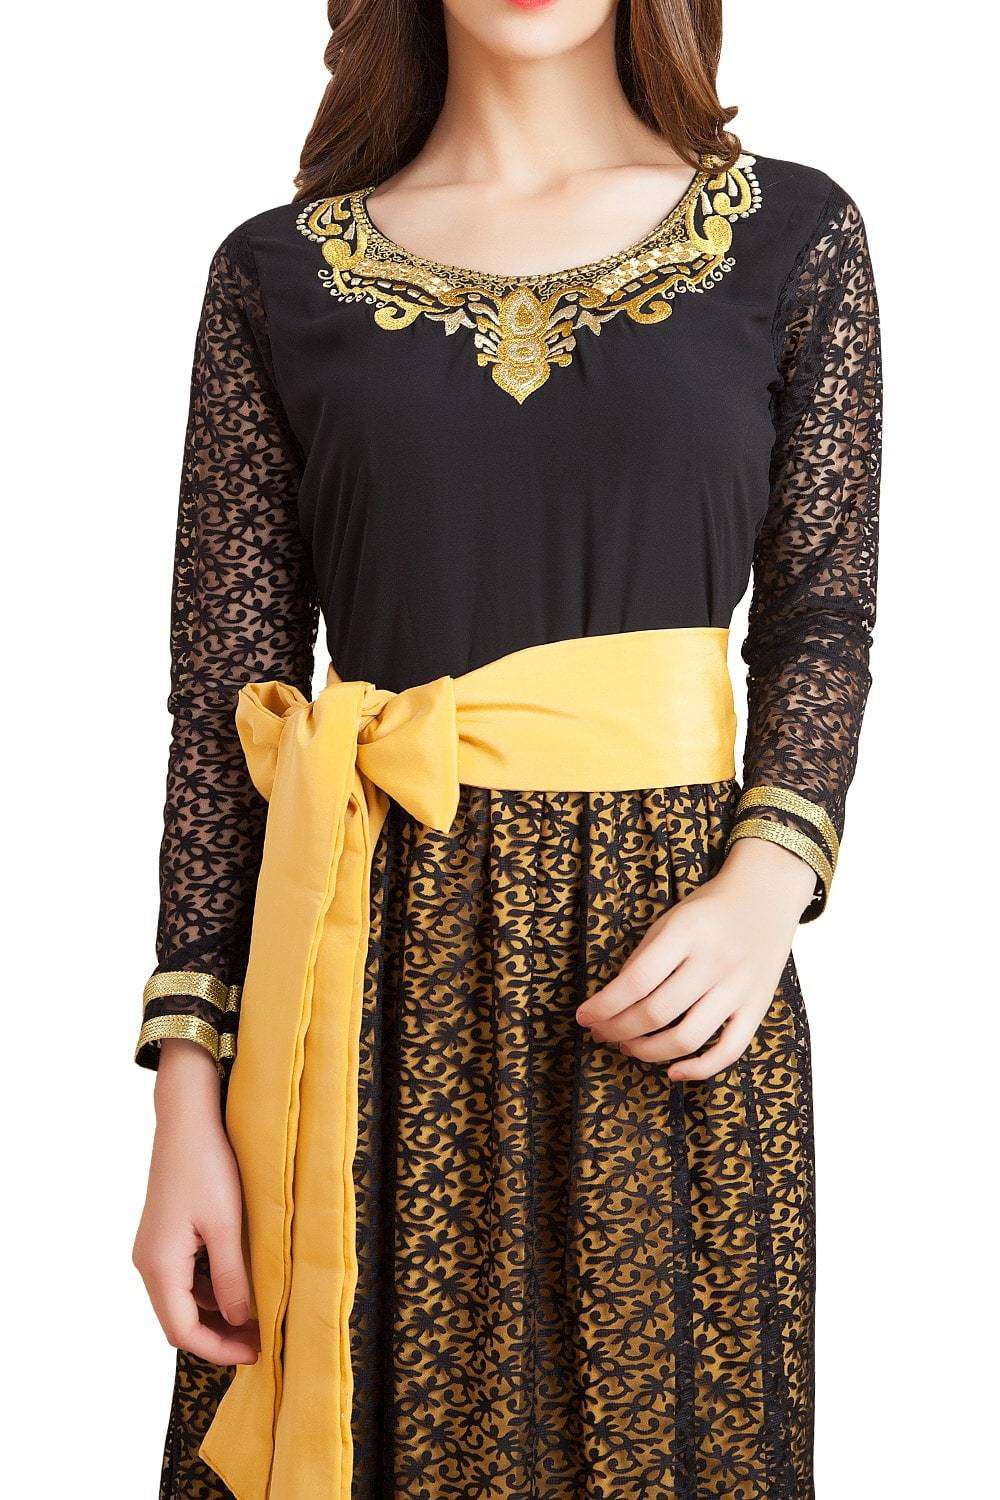 Yellow and Black Color Net Brasso Thread Work Arab Dubai Style Islamic Dress